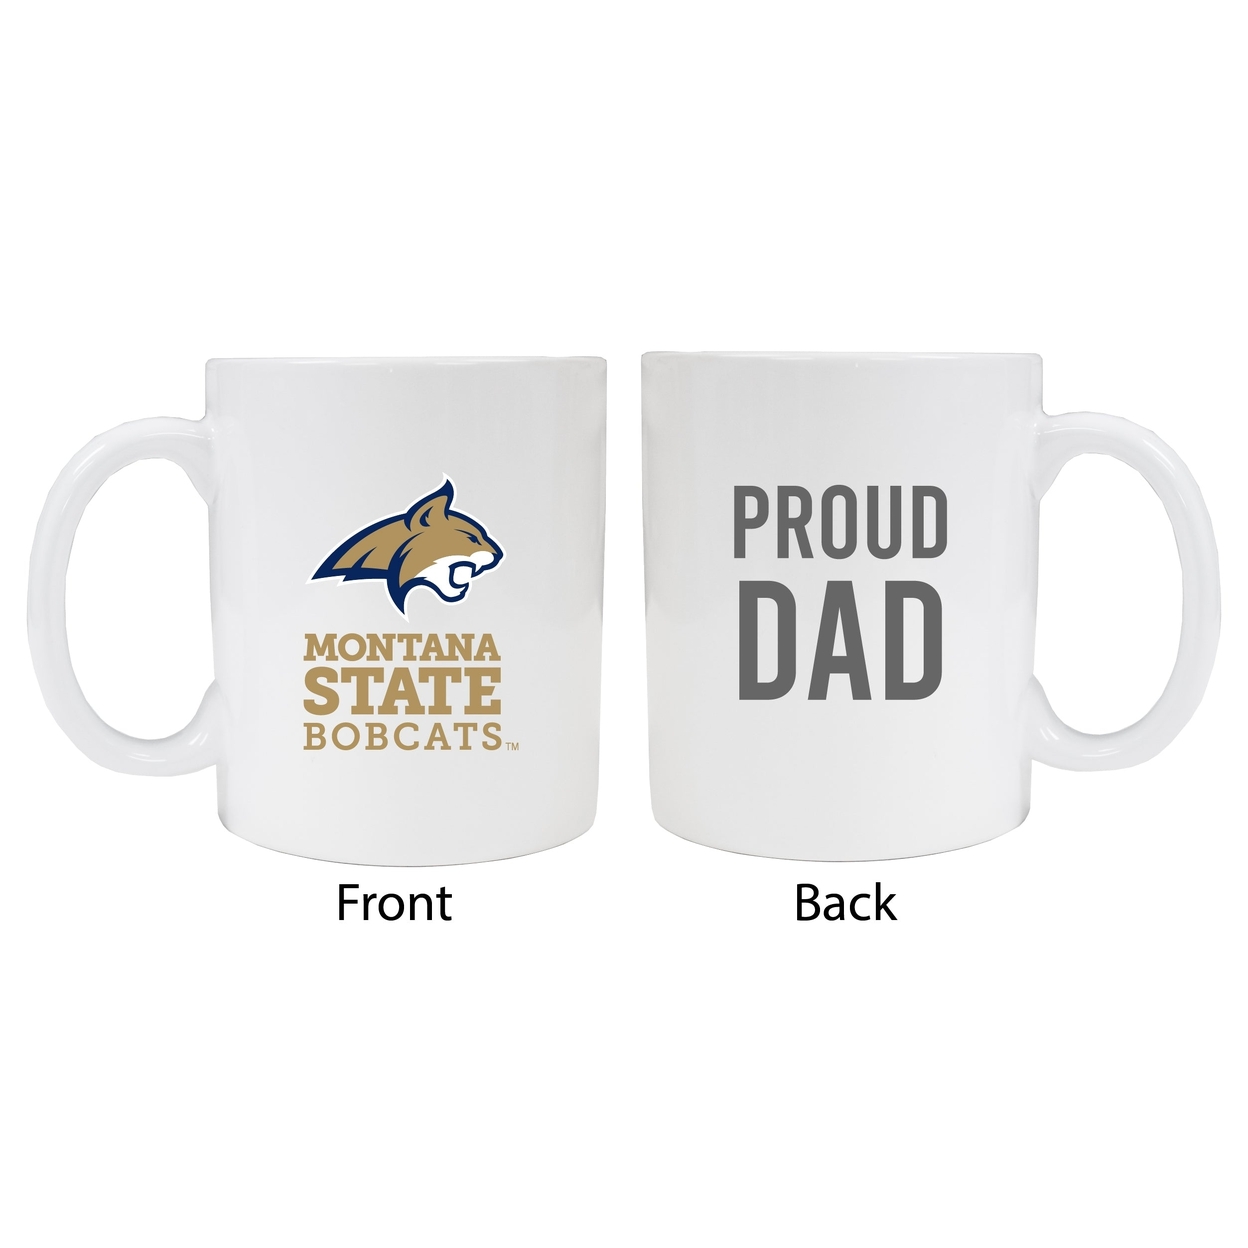 Montana State Bobcats Proud Dad Ceramic Coffee Mug - White (2 Pack)